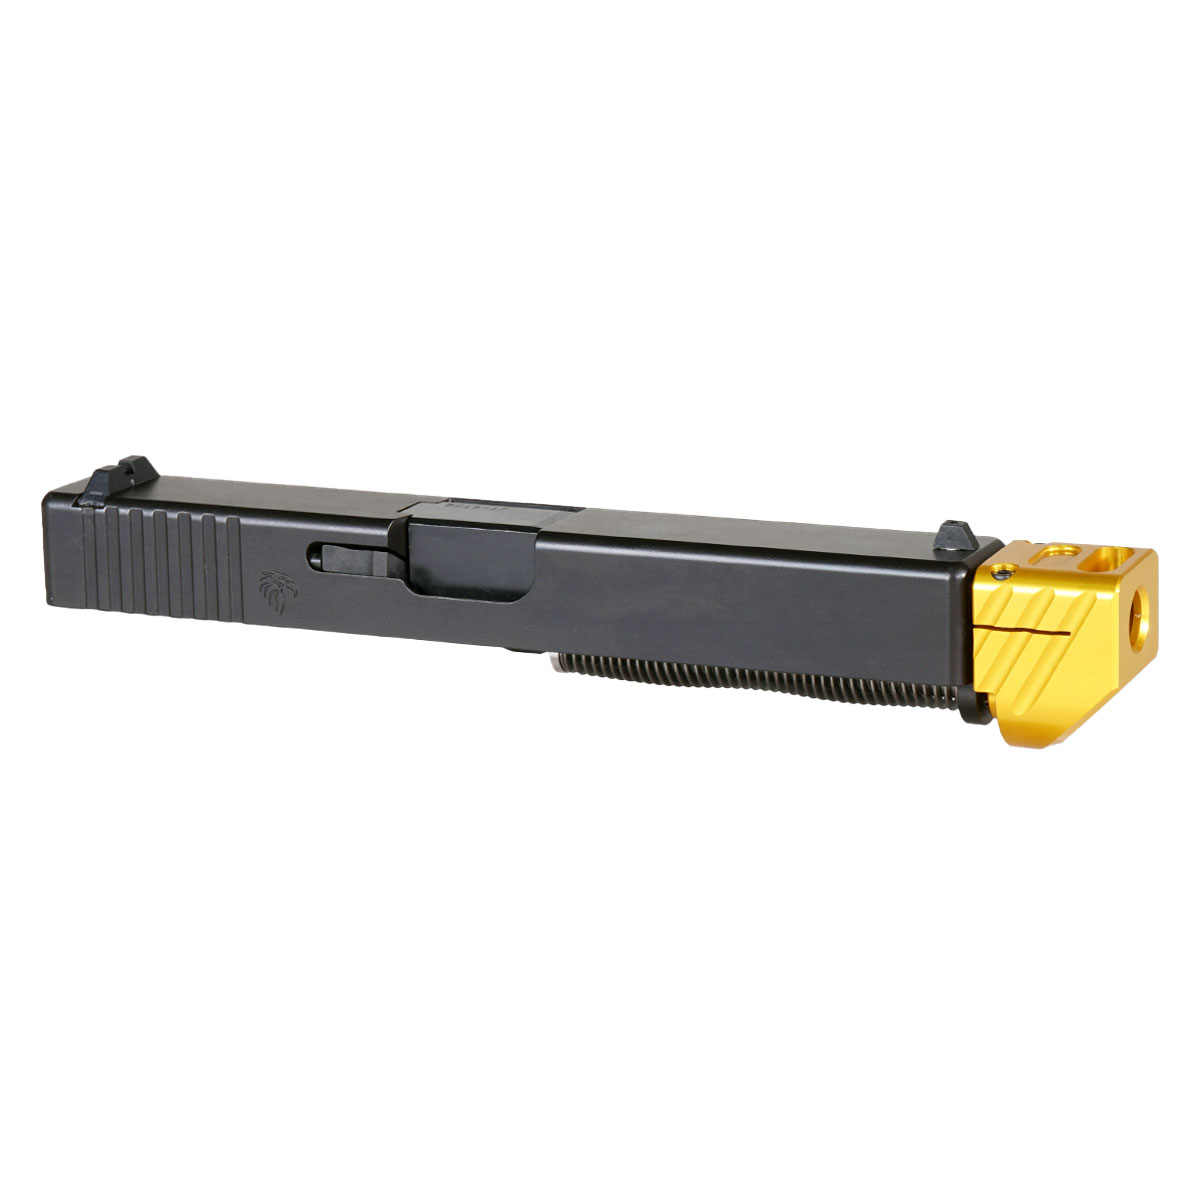 MMC 'Boomerango V2 w/ Gold Compensator' 9mm Complete Slide Kit - Glock 17 Gen 1-3 Compatible